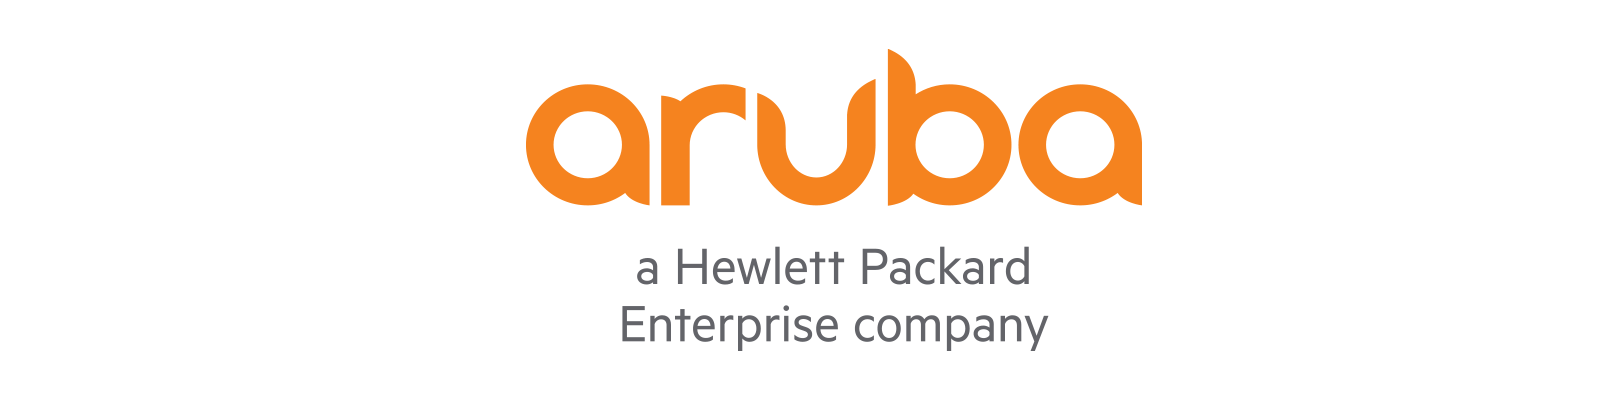 Hewlett Packard Inc Logo - Aruba | Enterprise Networking and Security Solutions